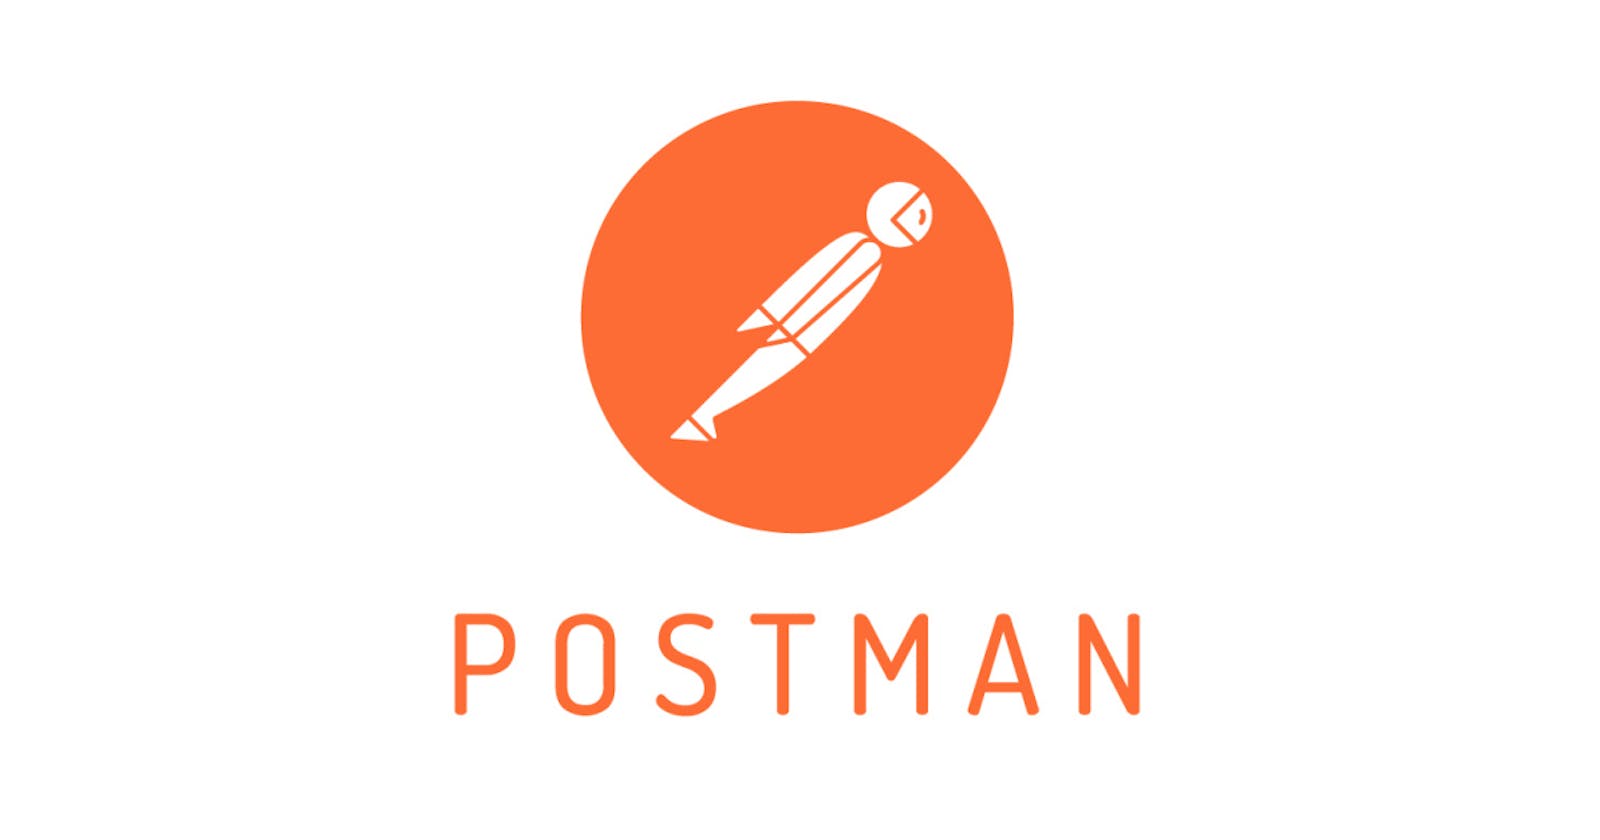 API Testing using Postman - Part 3